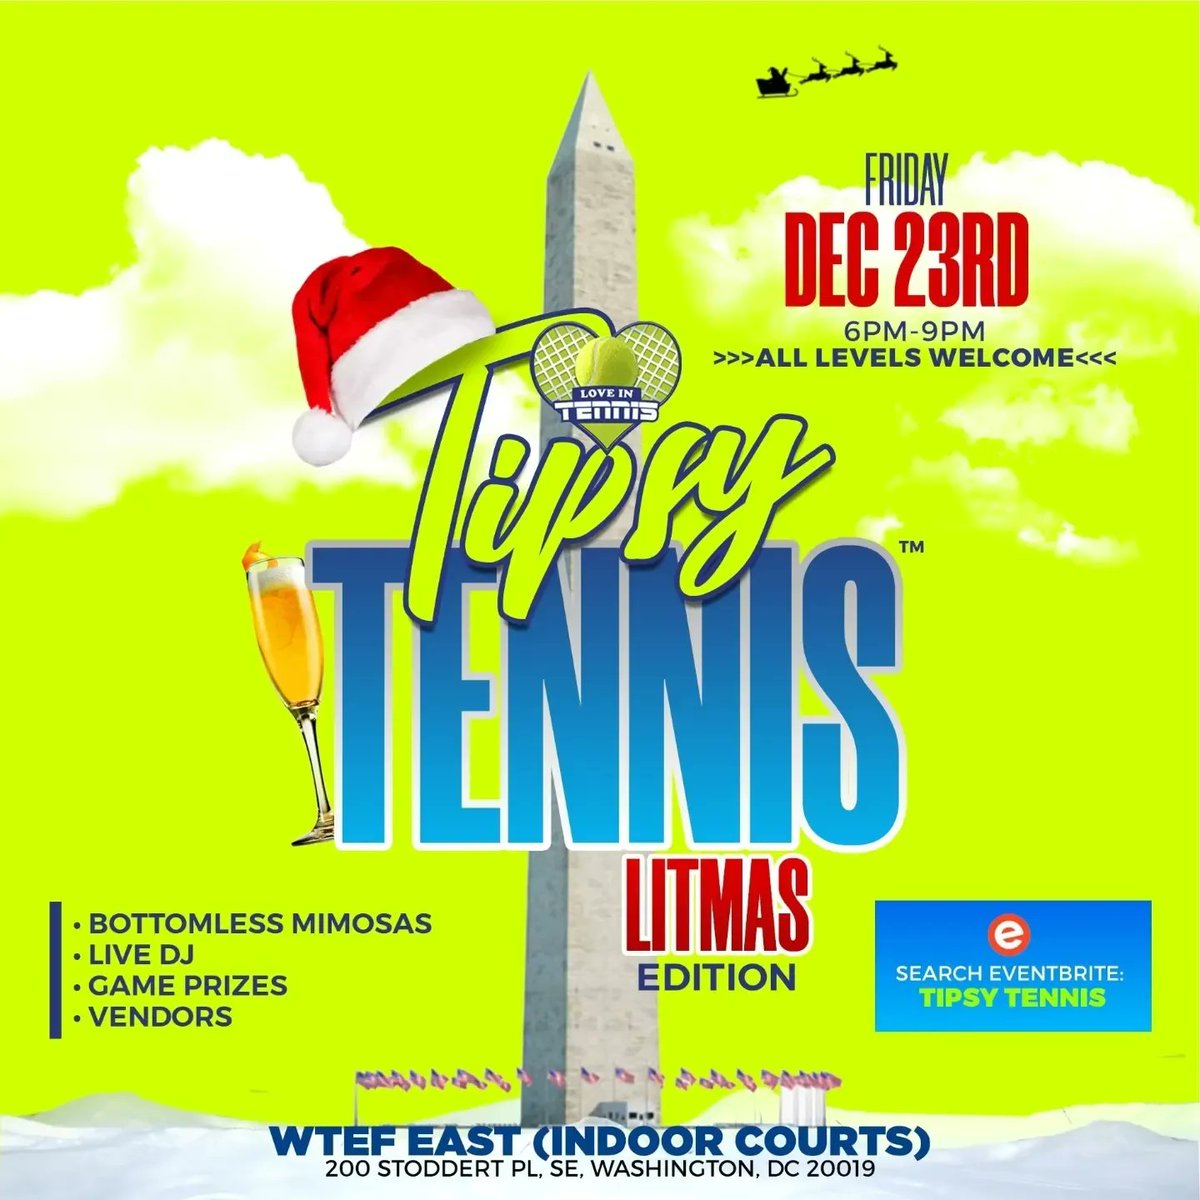 🗣WE ARE OFFICIALLY A WEEK AWAY‼️
TipsyTennisLITMas.eventbrite.com 

#LoveinTennis #TipsyTennis #LITMas #HappyHolidays  #stockingstuffers #DCNightlife #bottomlessmimosas #brunch #MerryChristmas #tennis  #tennisparty  #blacktennis #DMVTennis #ThingsToDoinDC